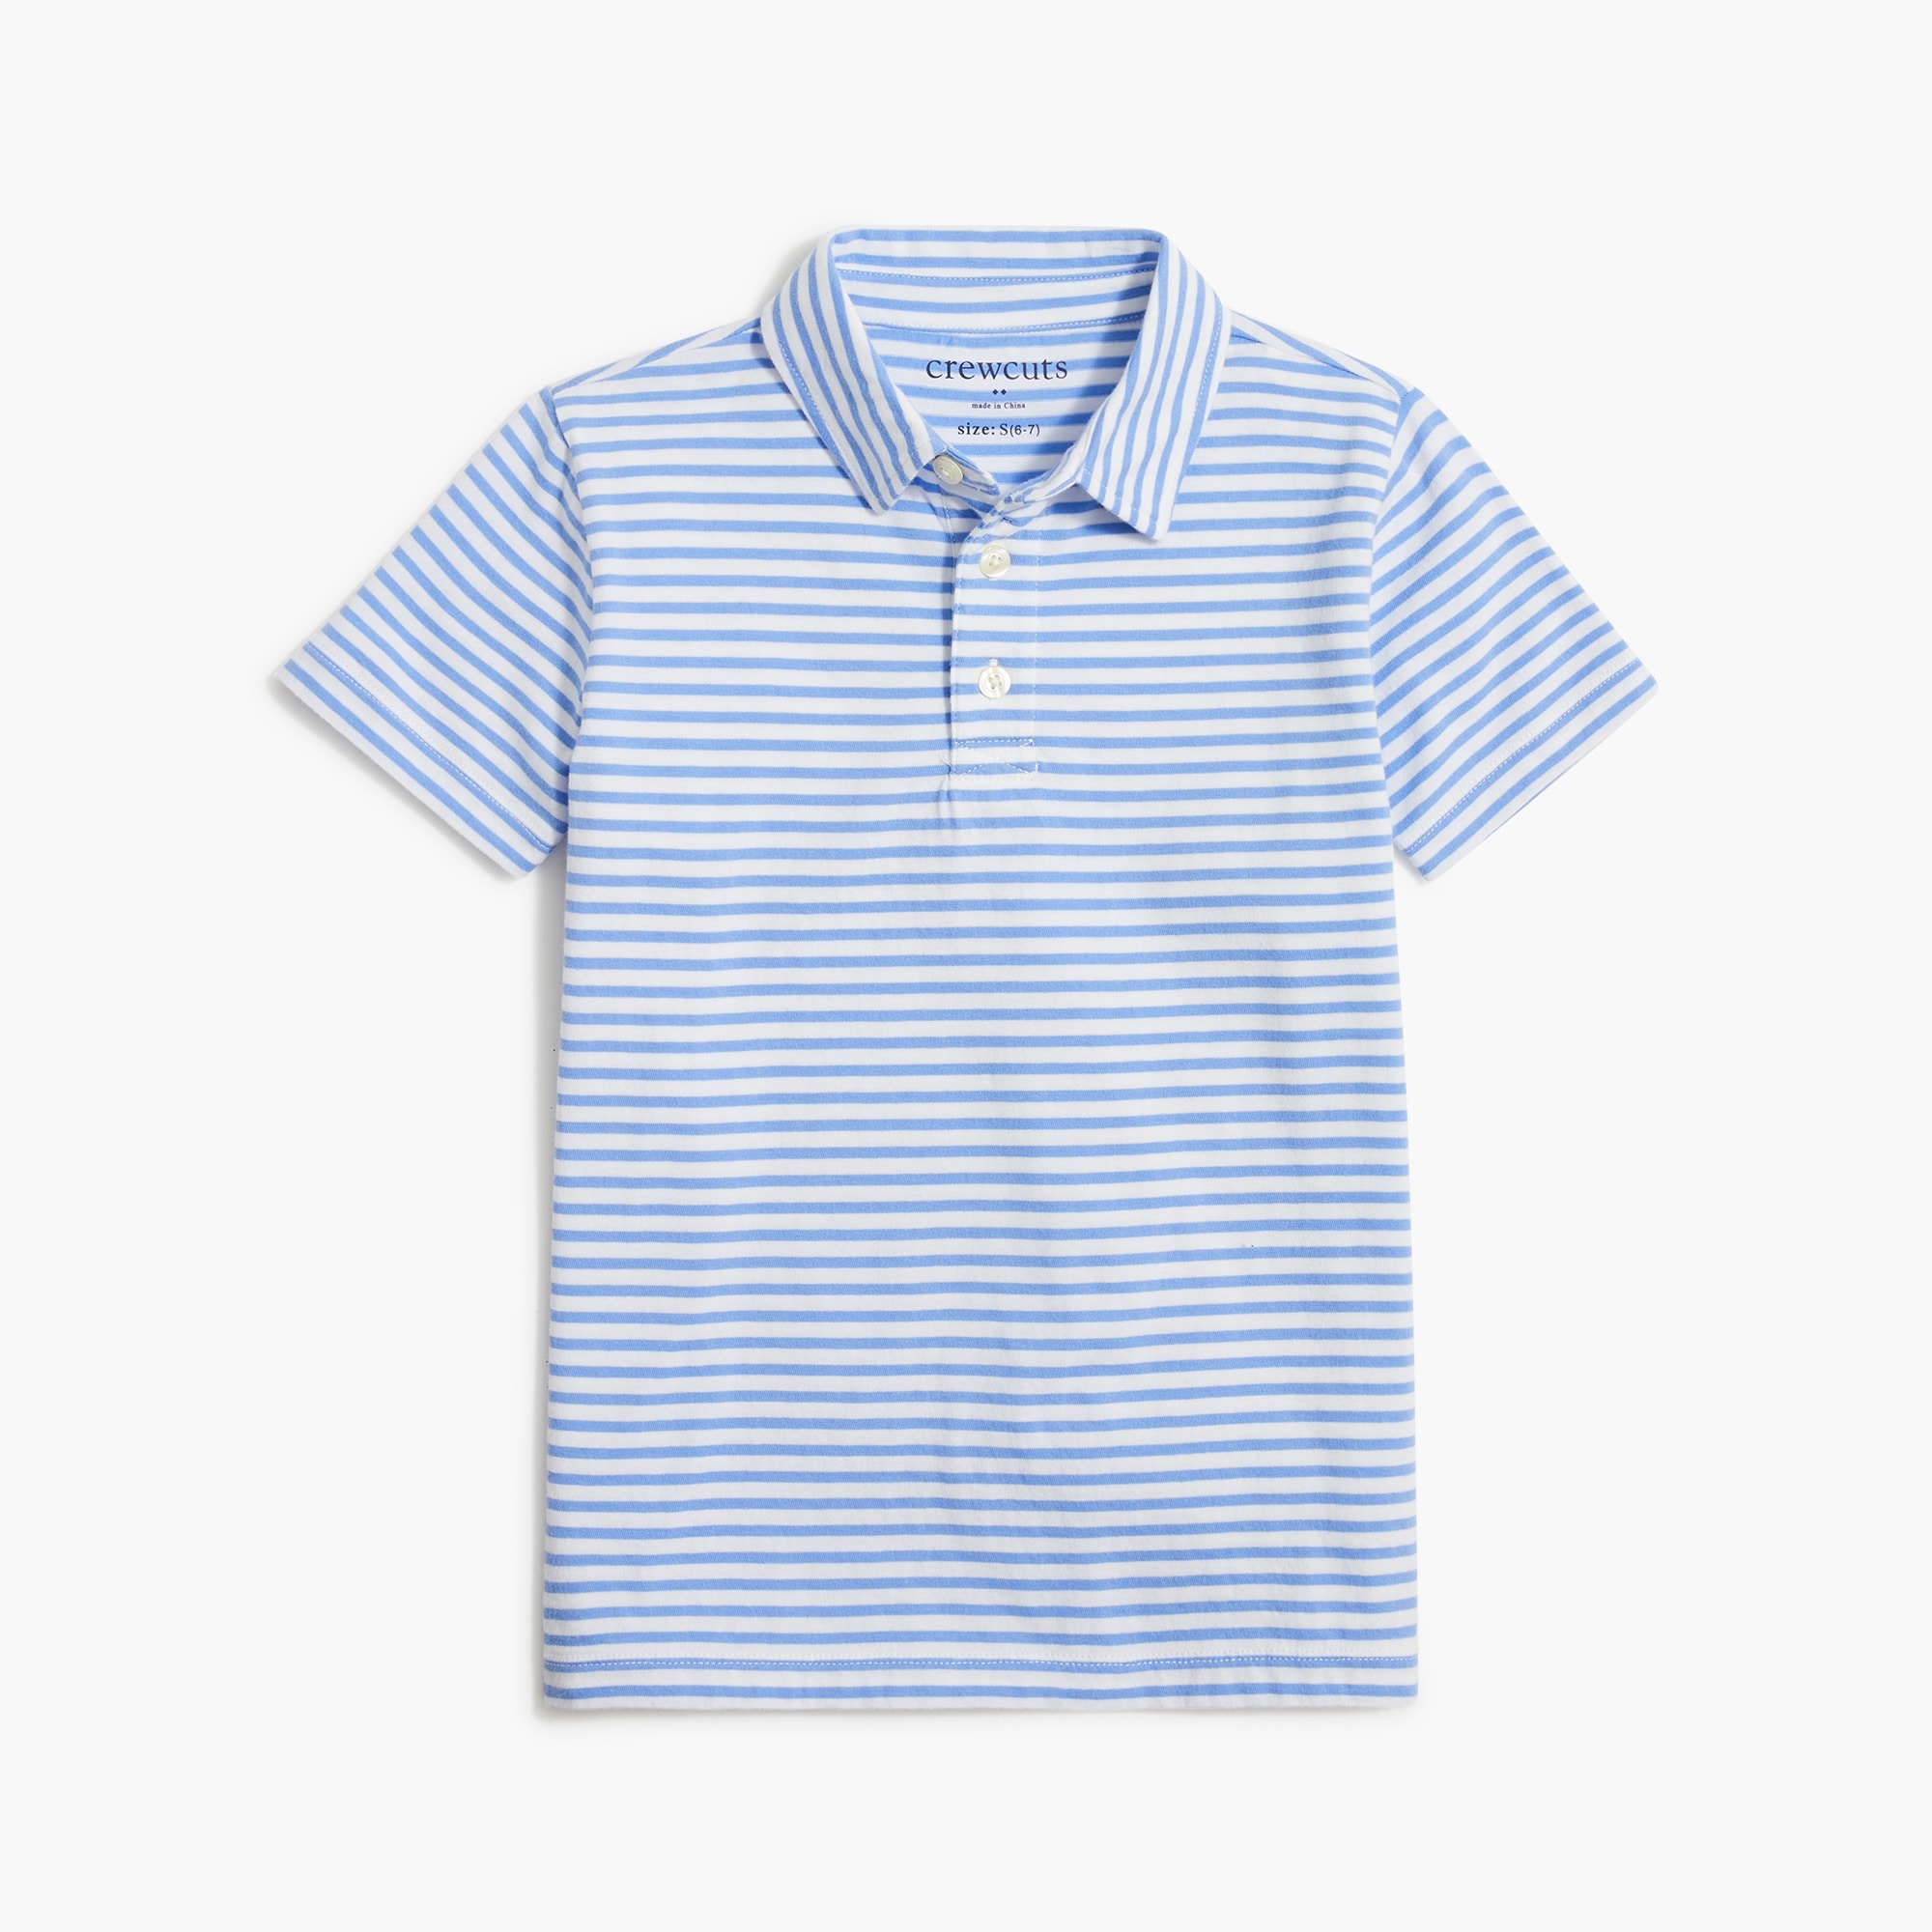 Jcrew Boys cotton striped polo shirt